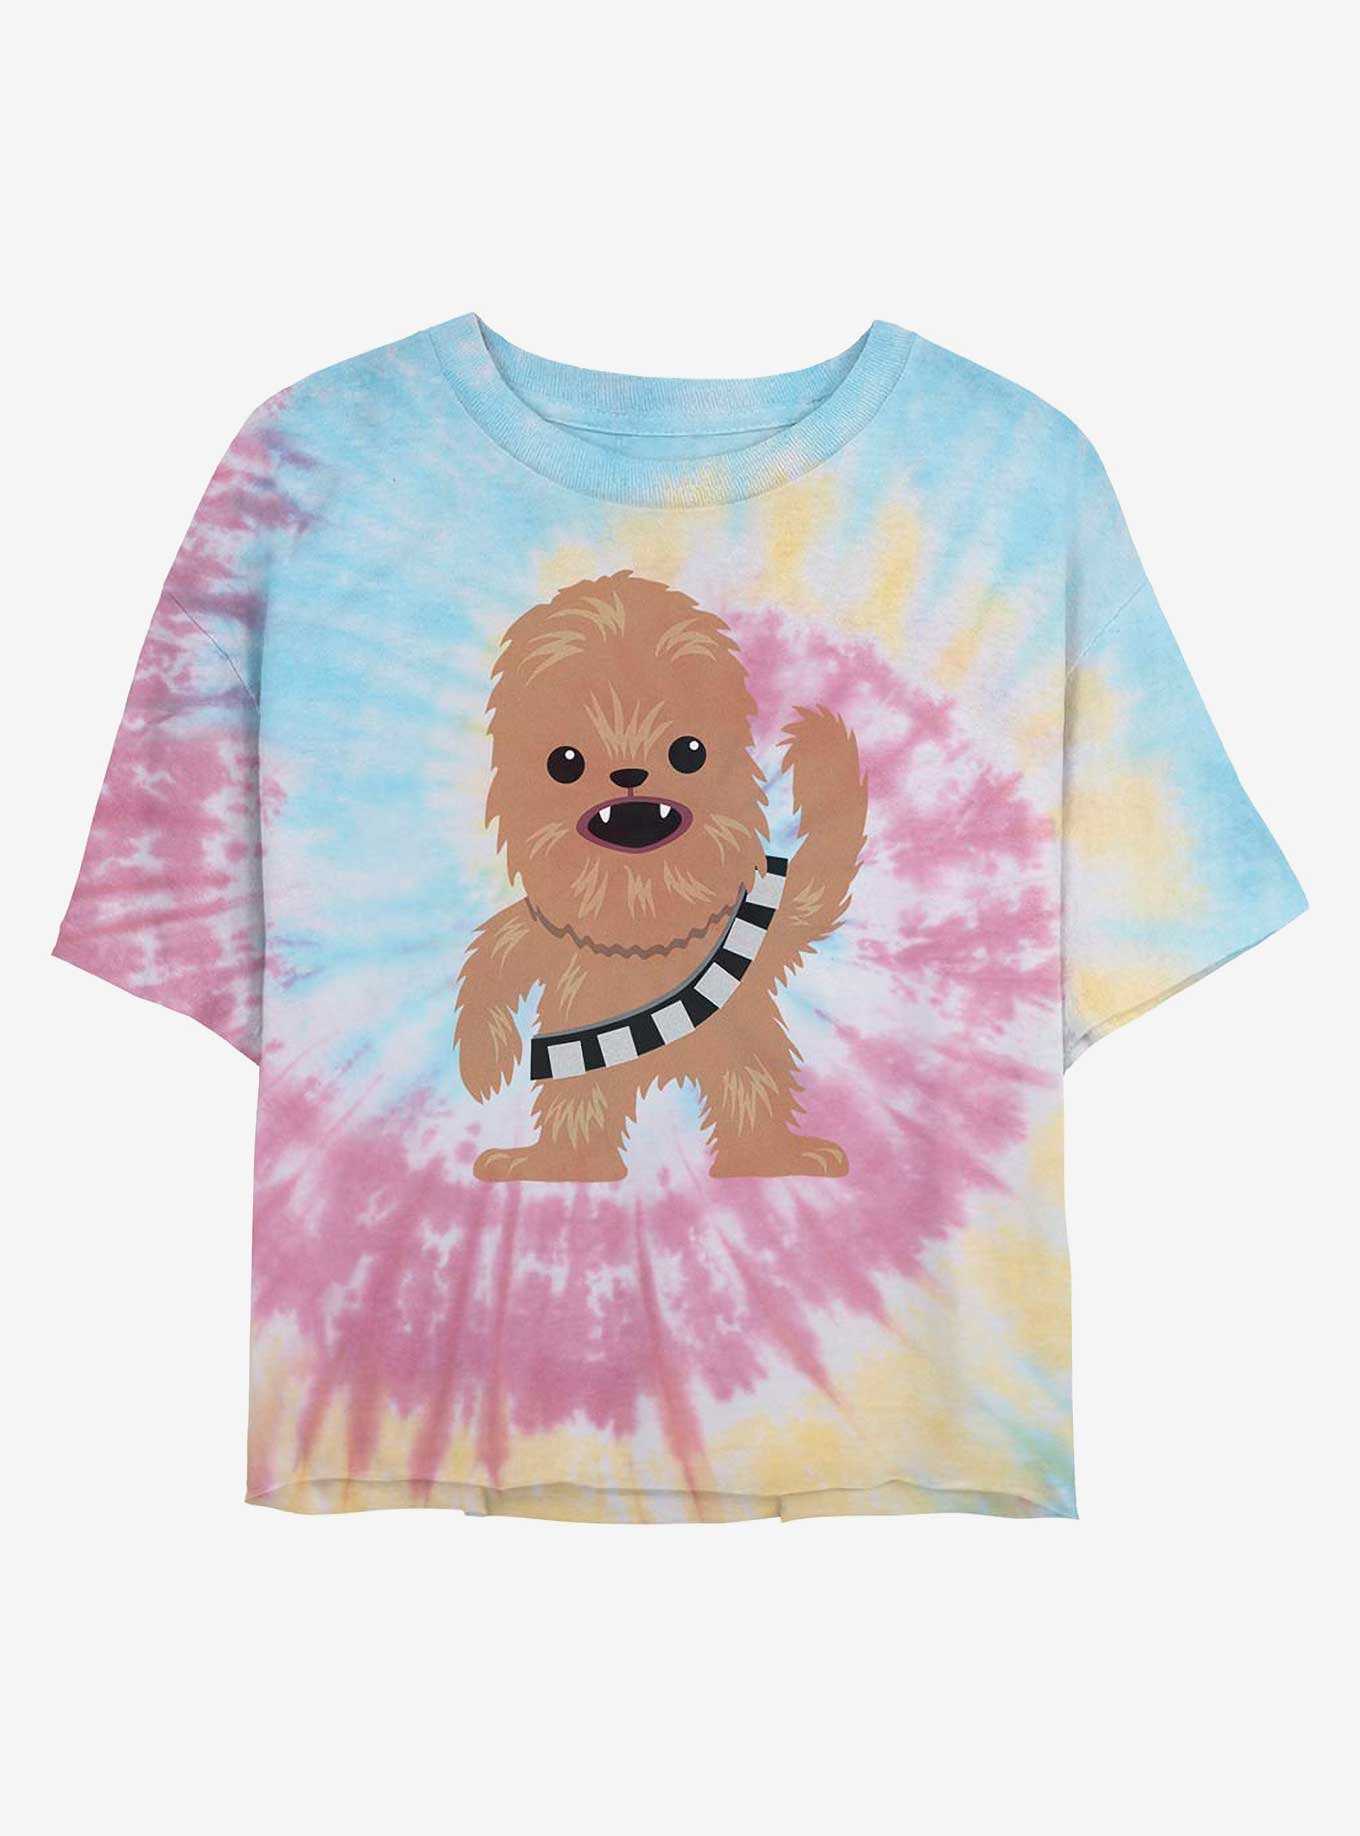 Star Wars Chewie Kawaii Tie Dye Crop Girls T-Shirt, , hi-res